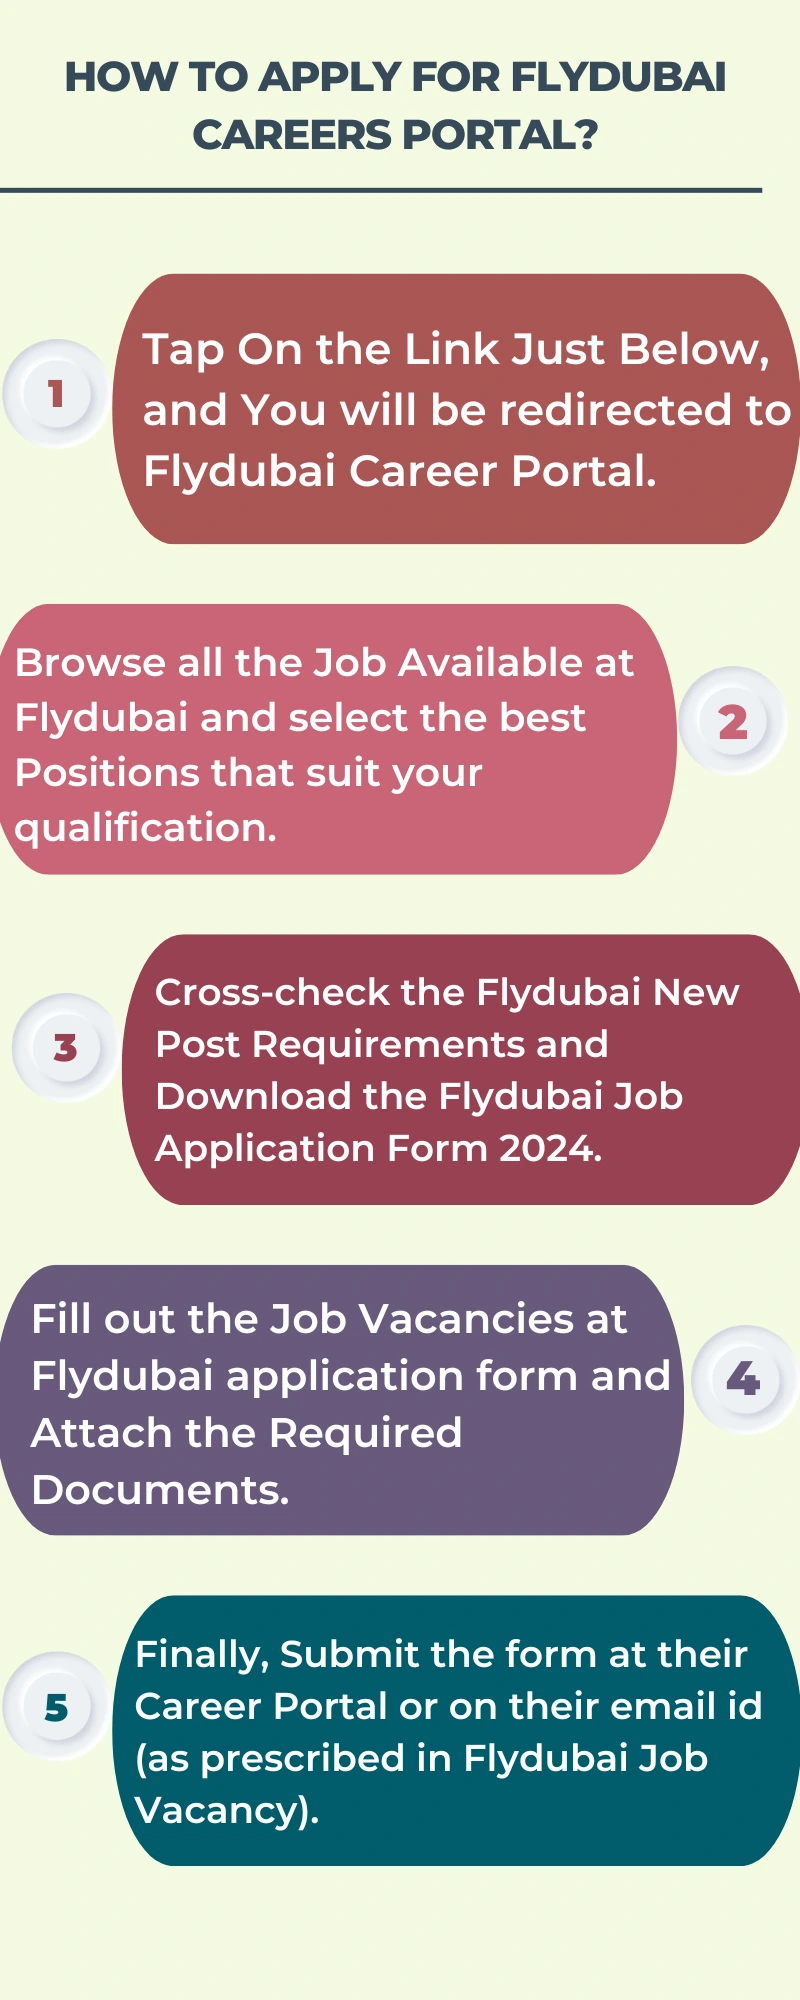 How To Apply for Flydubai Careers Portal